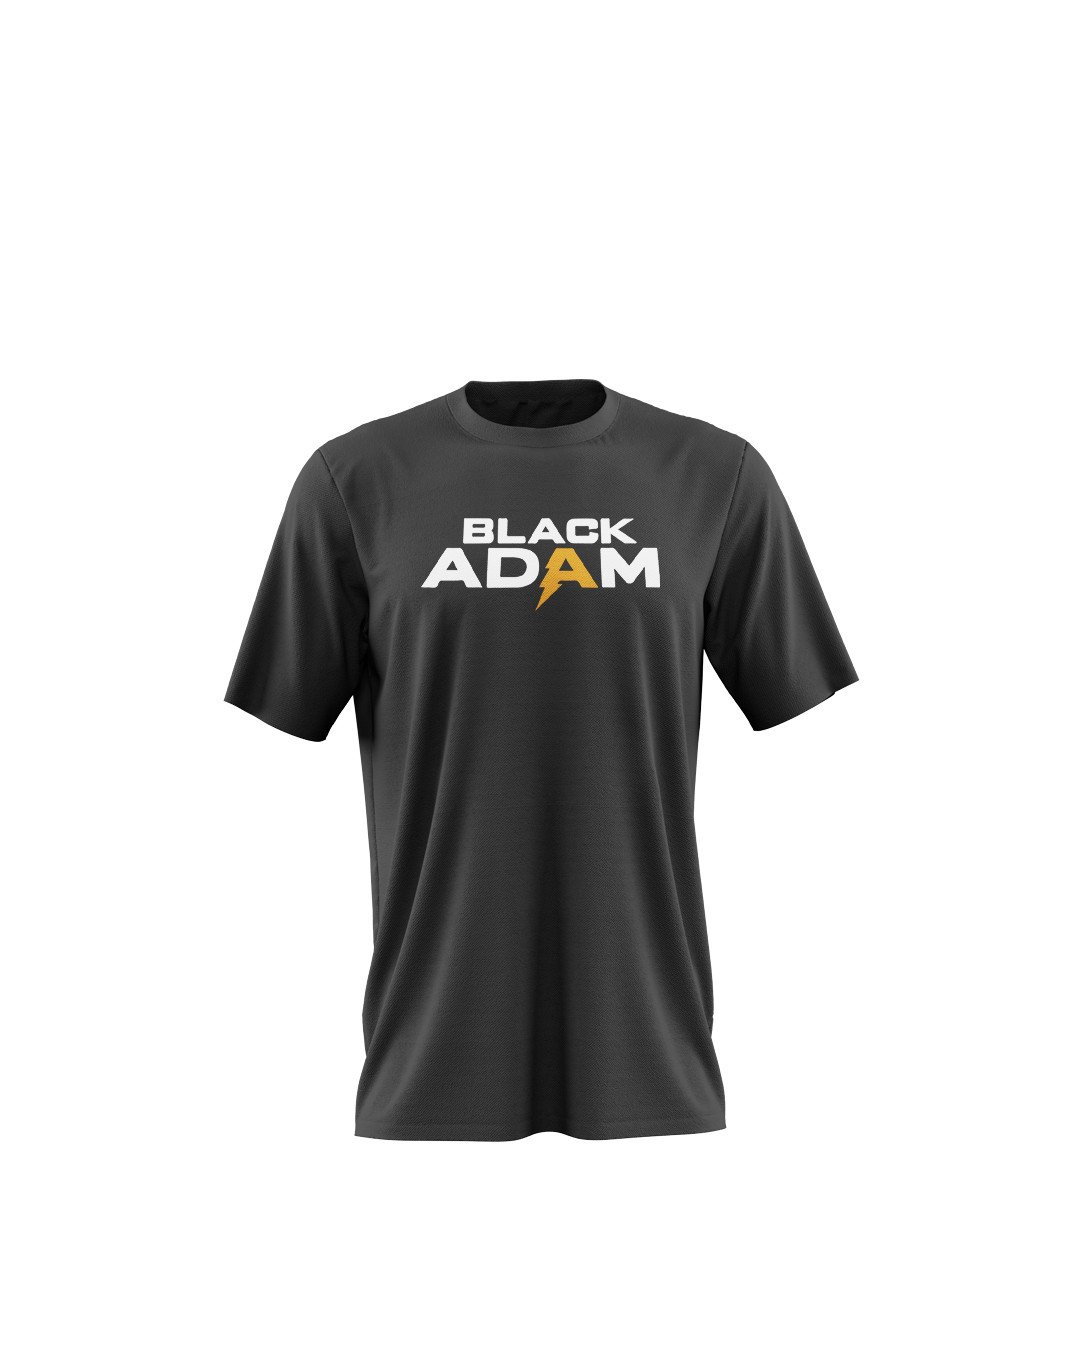 TeesWarrior Black adam Graphic Printed 100% Cotton T-Shirt - Regular Fit, Round Neck, Half Sleeves